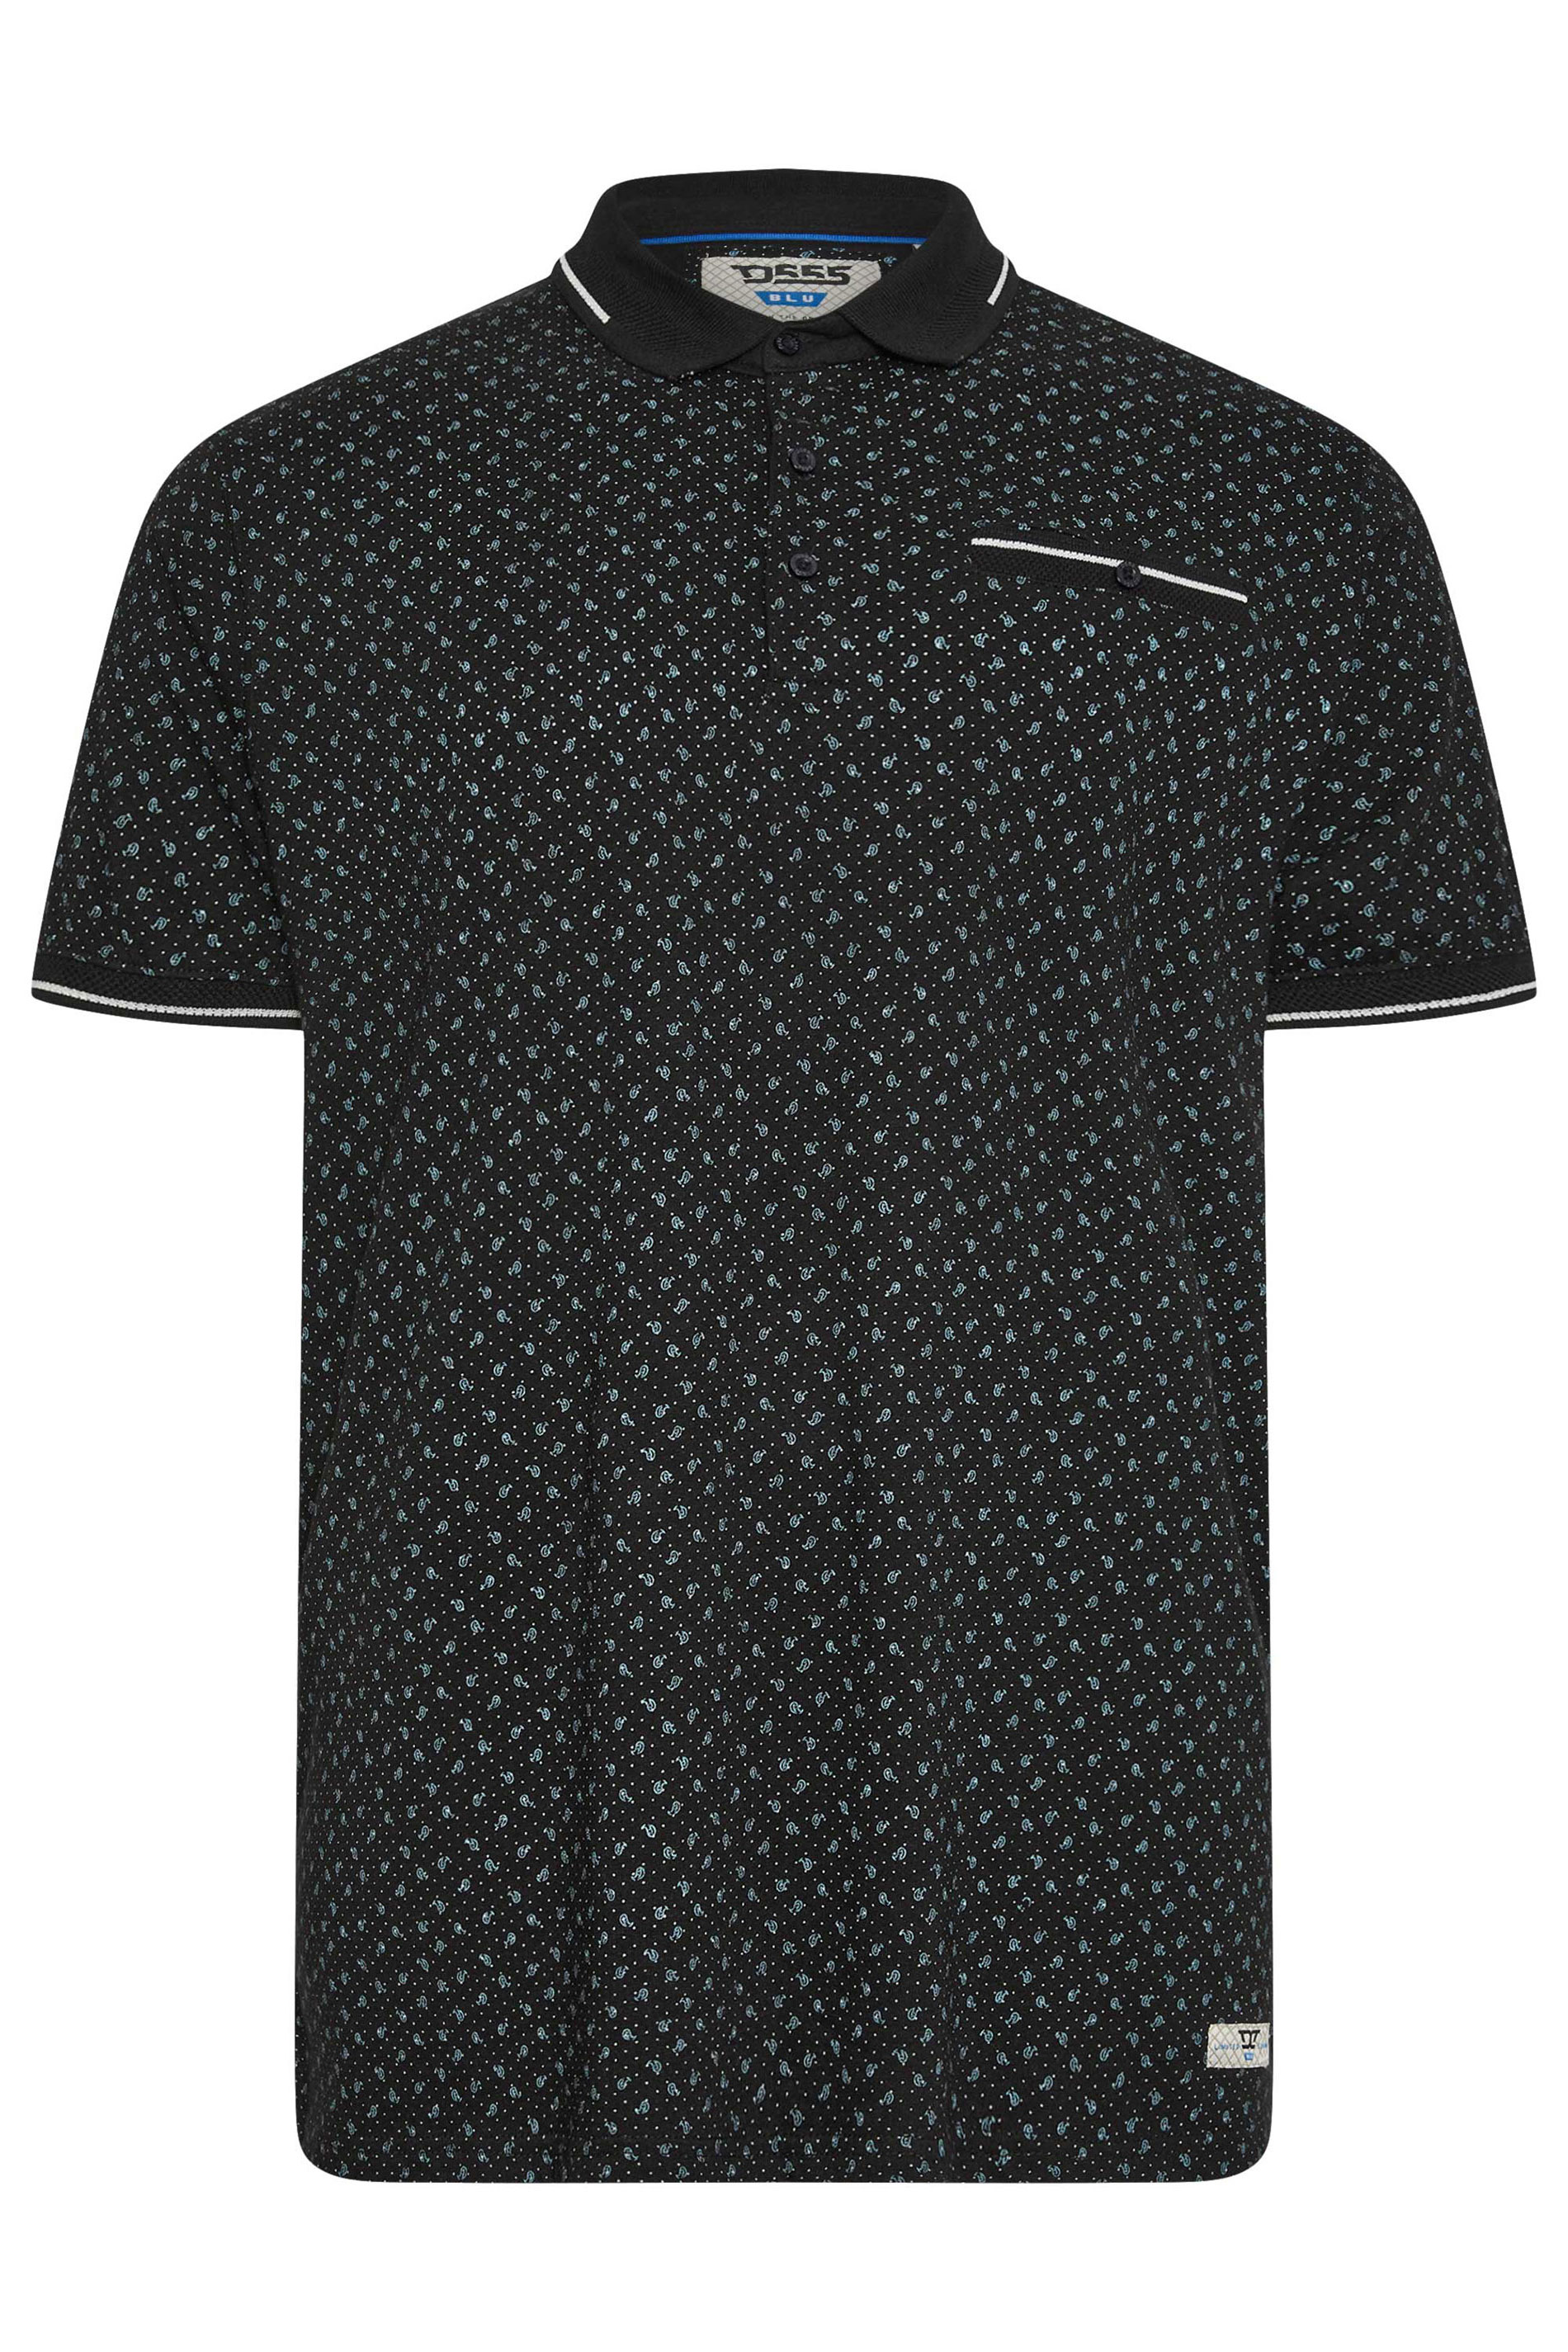 D555 Big & Tall Black Spot Print Jacquard Collar Polo Shirt | BadRhino 2